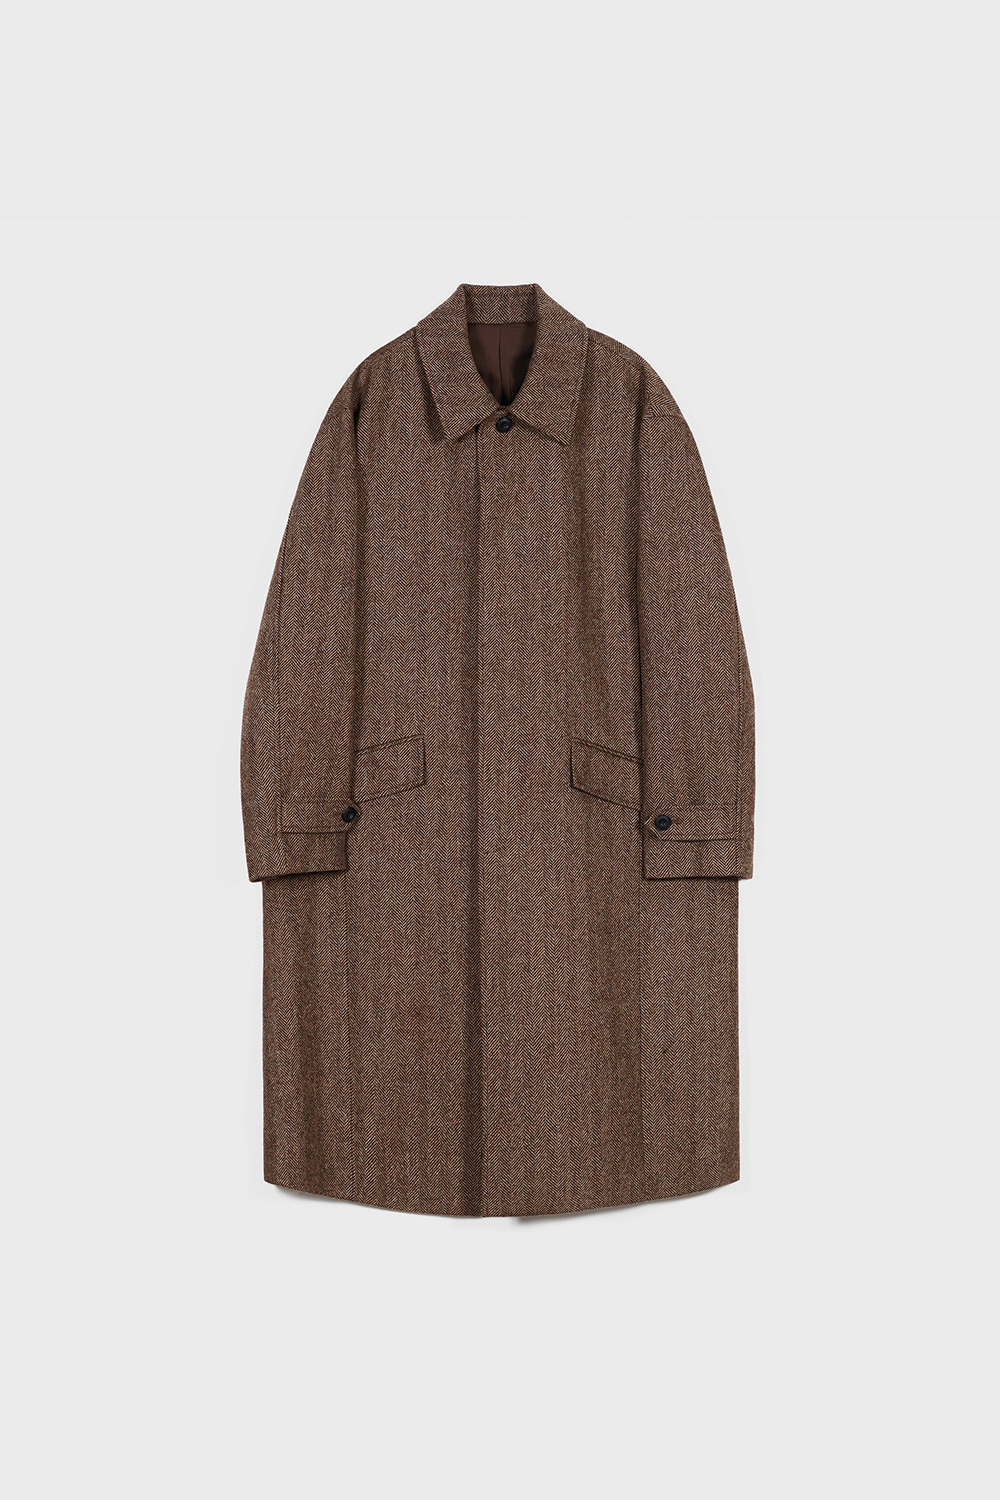 [Abraham Moon] Wool Mac Coat (Herringbone Brown)